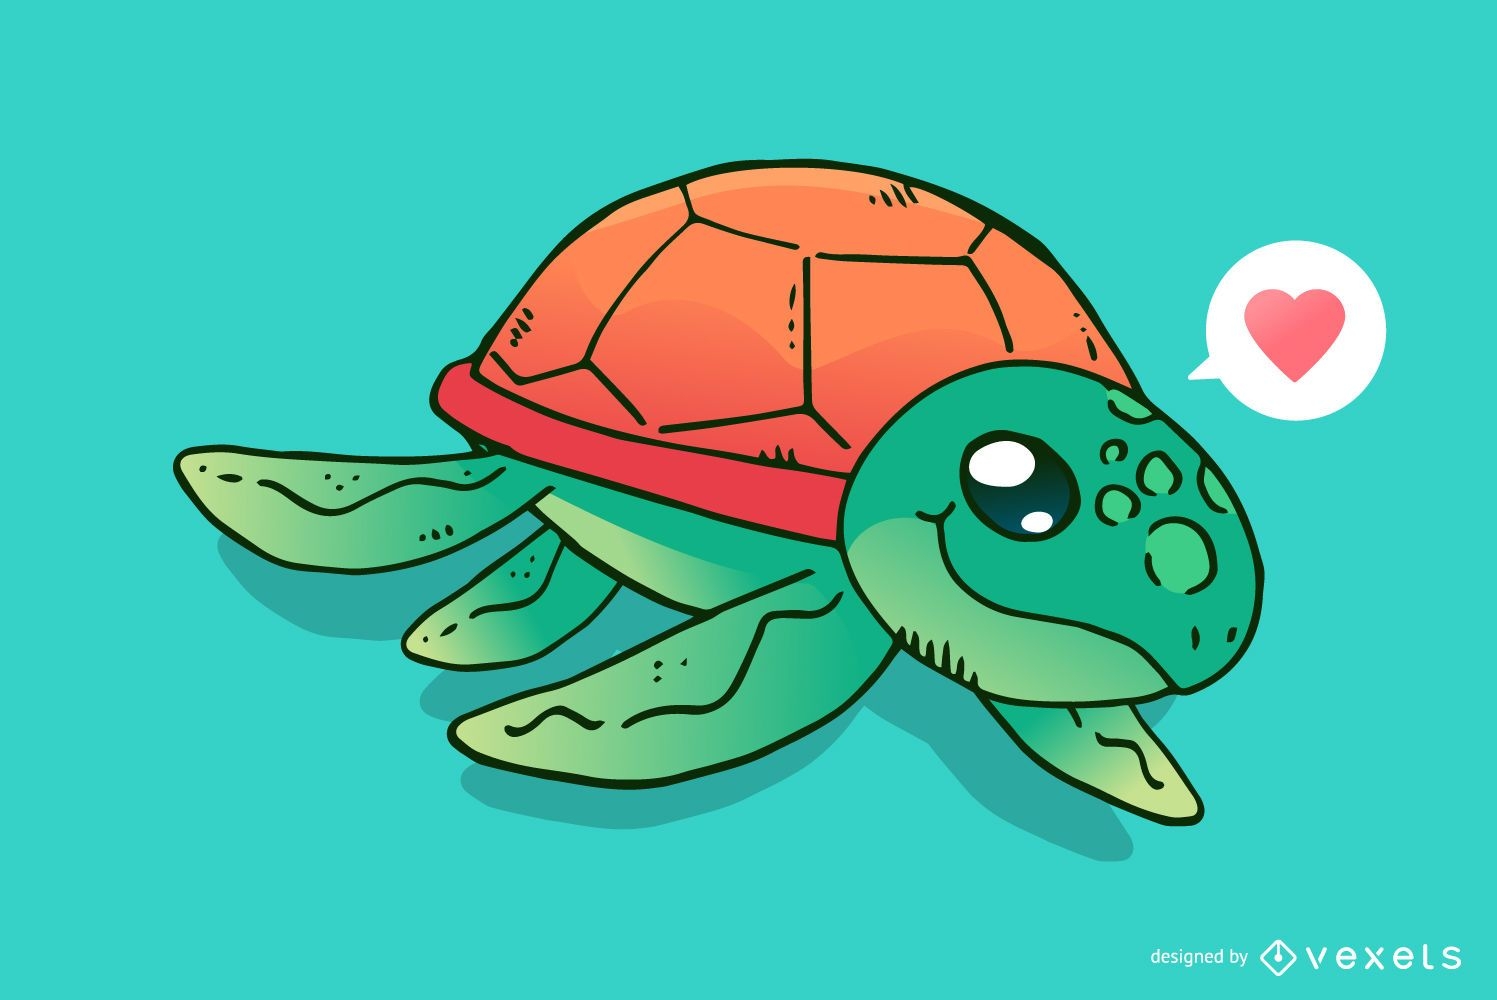 Descarga Vector De Cute Dibujos Animados De Tortugas Marinas